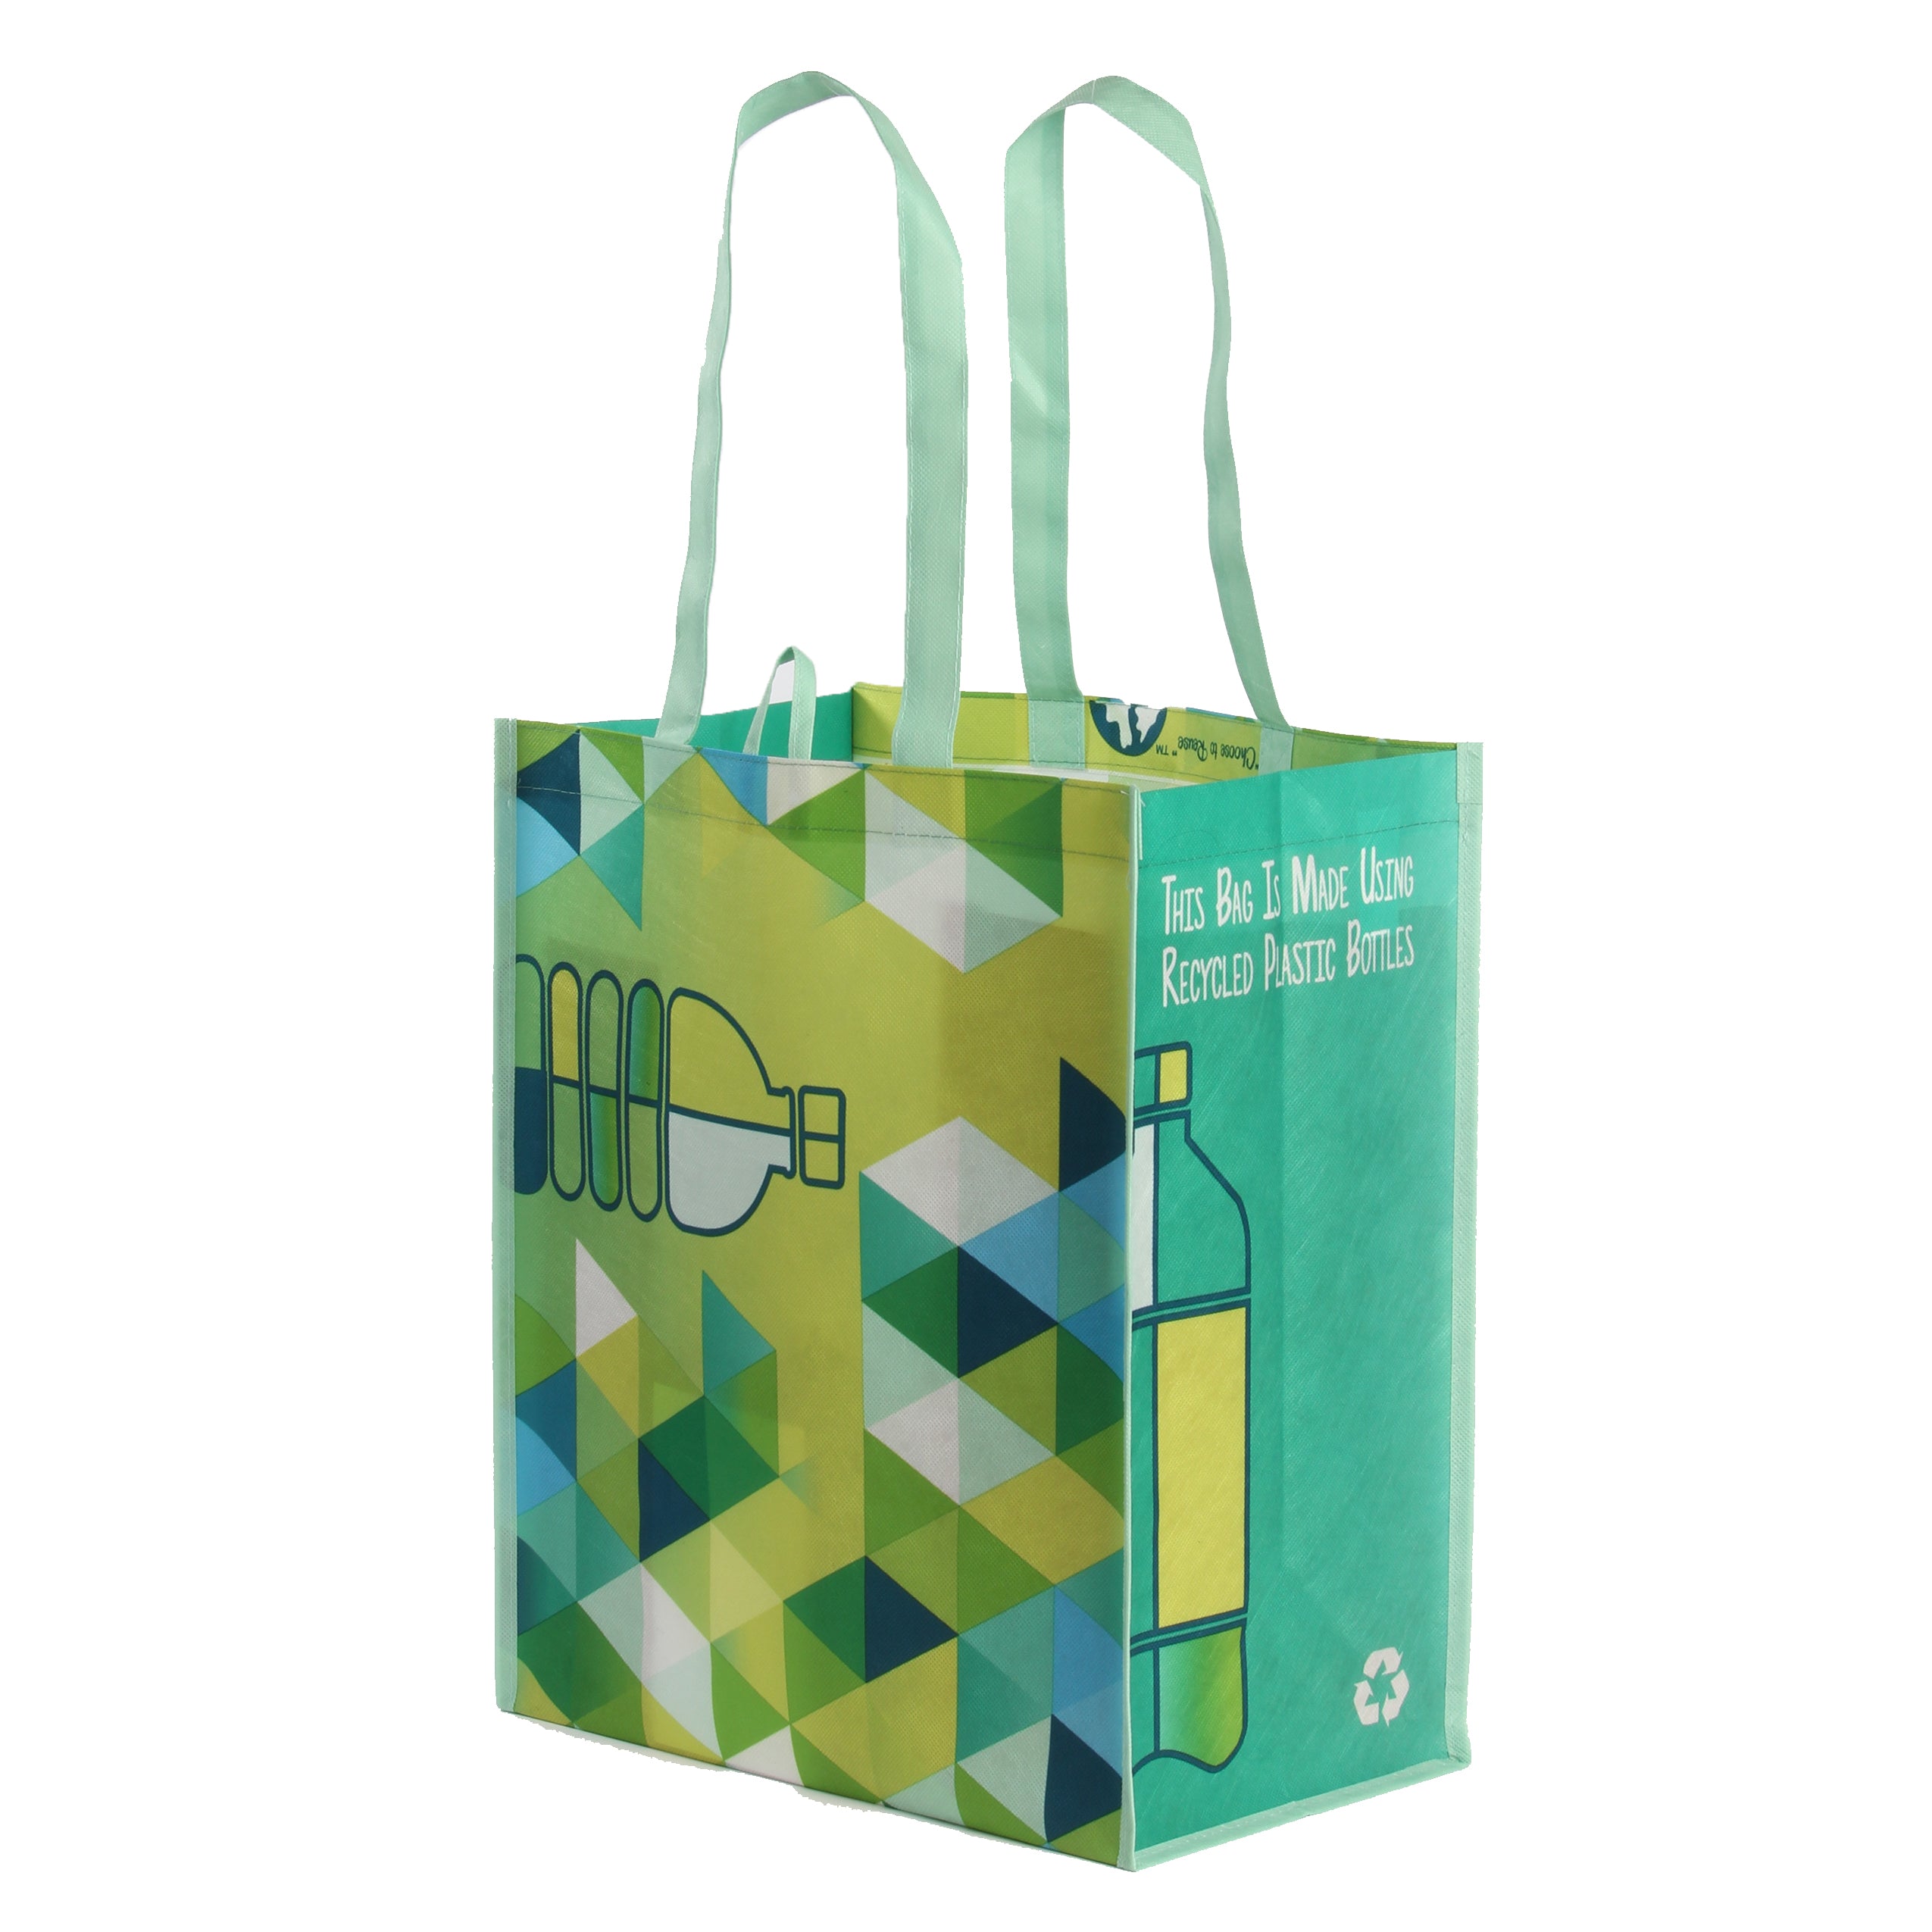 Plastic Black Jumbo Shopping Bags, Grocery Bags, Poly Bags, Multi